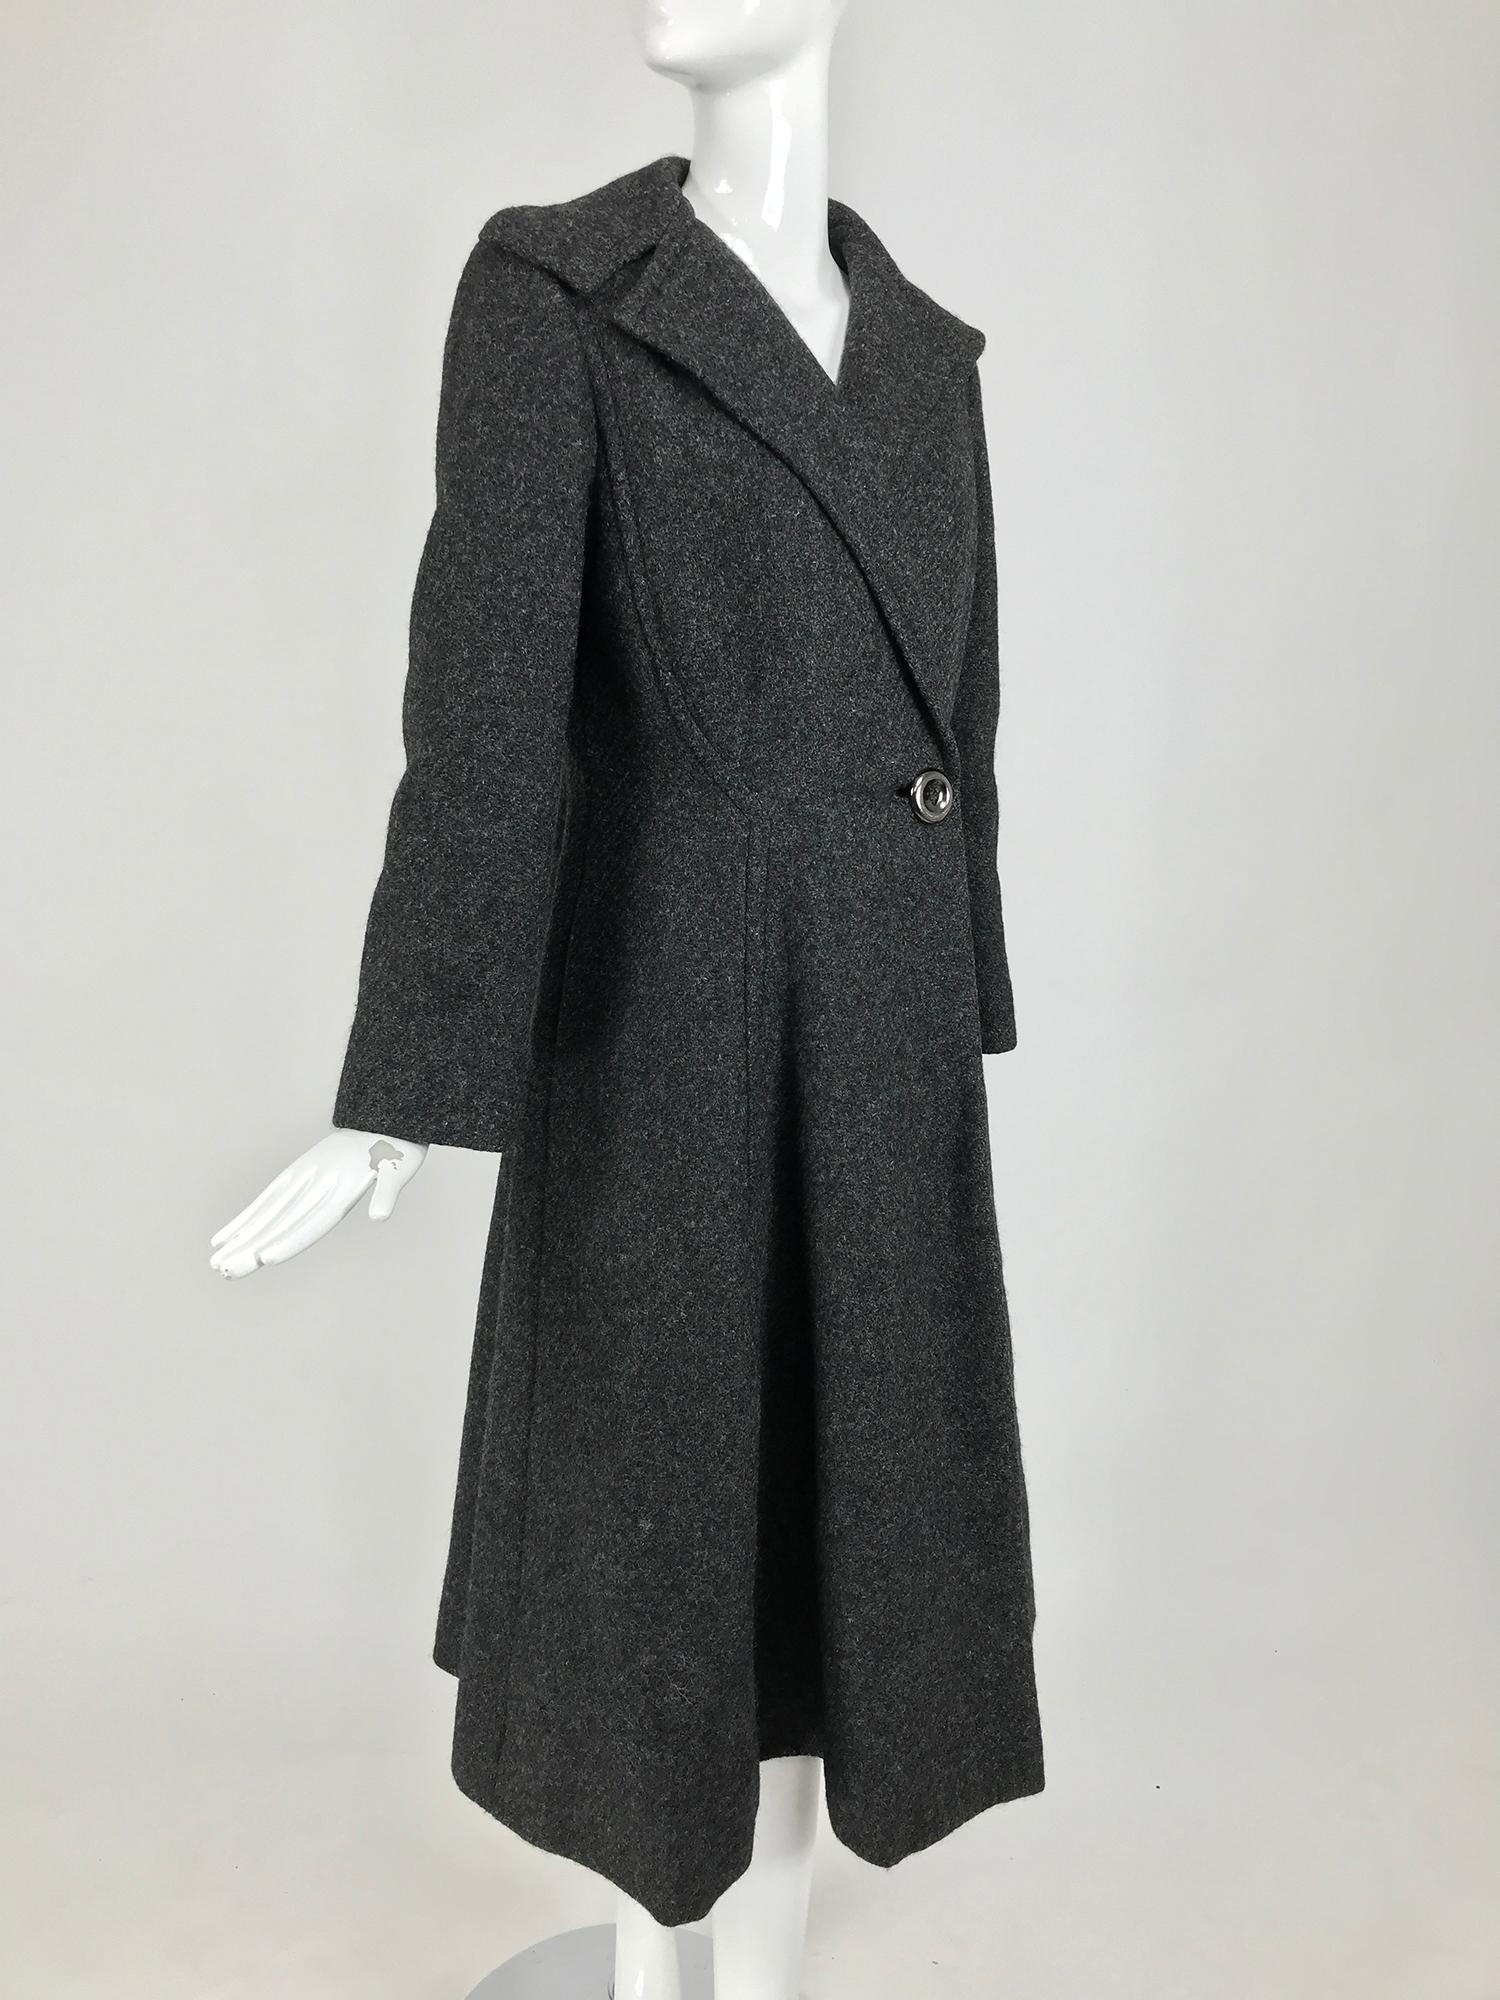 1950s dress coat